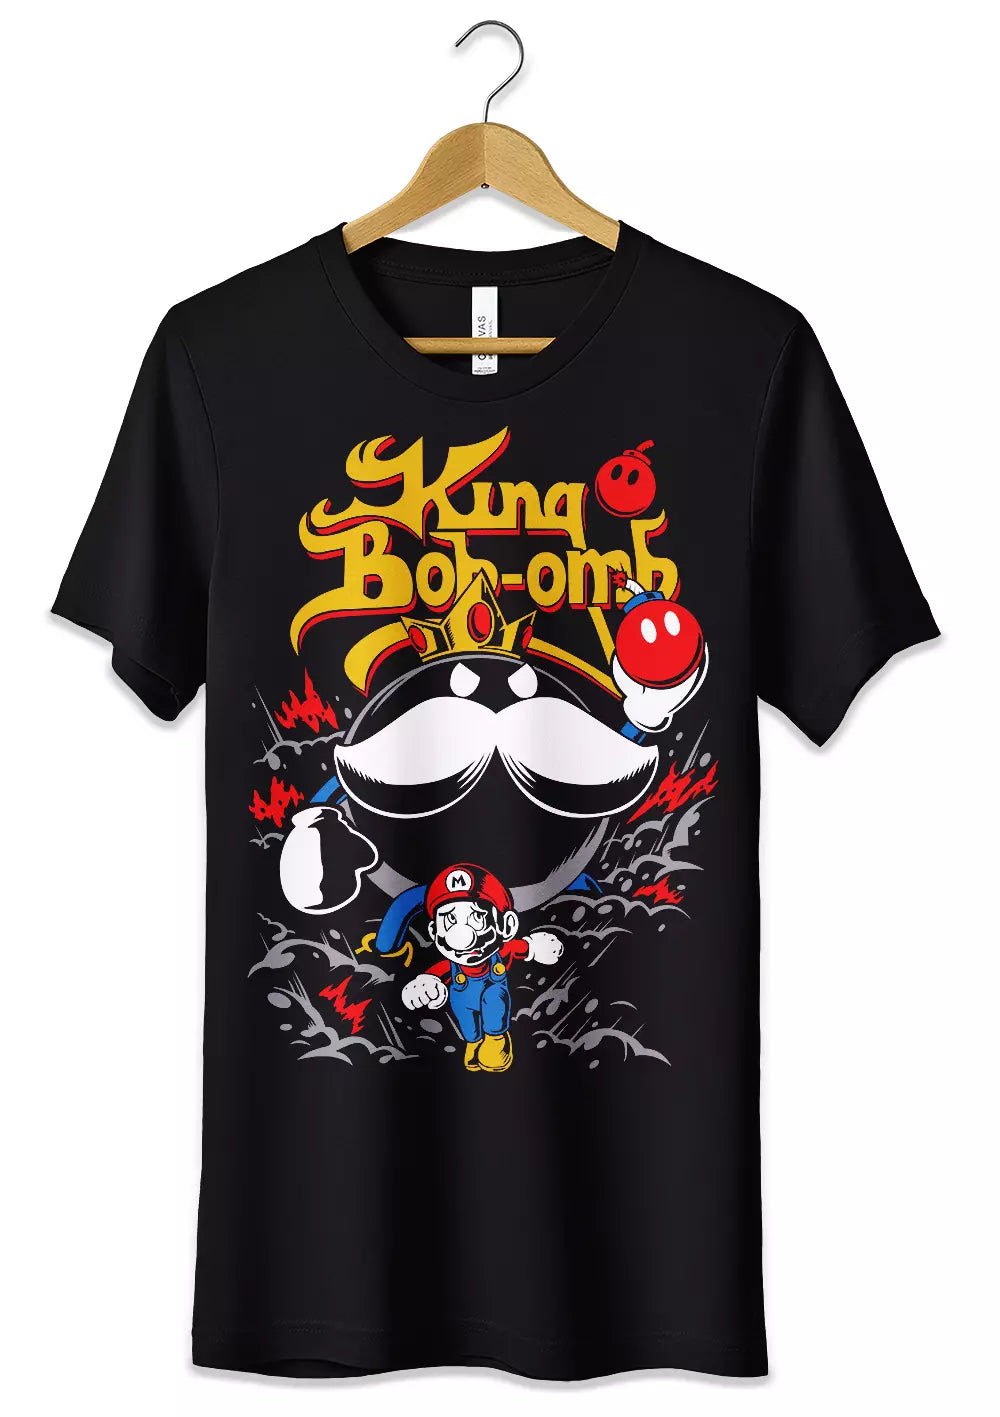 T-Shirt Maglietta Videogames Super Mario vs King Bob-omb, CmrDesignStore, T-Shirt, t-shirt-maglietta-videogames-super-mario-vs-king-bob-omb, CmrDesignStore